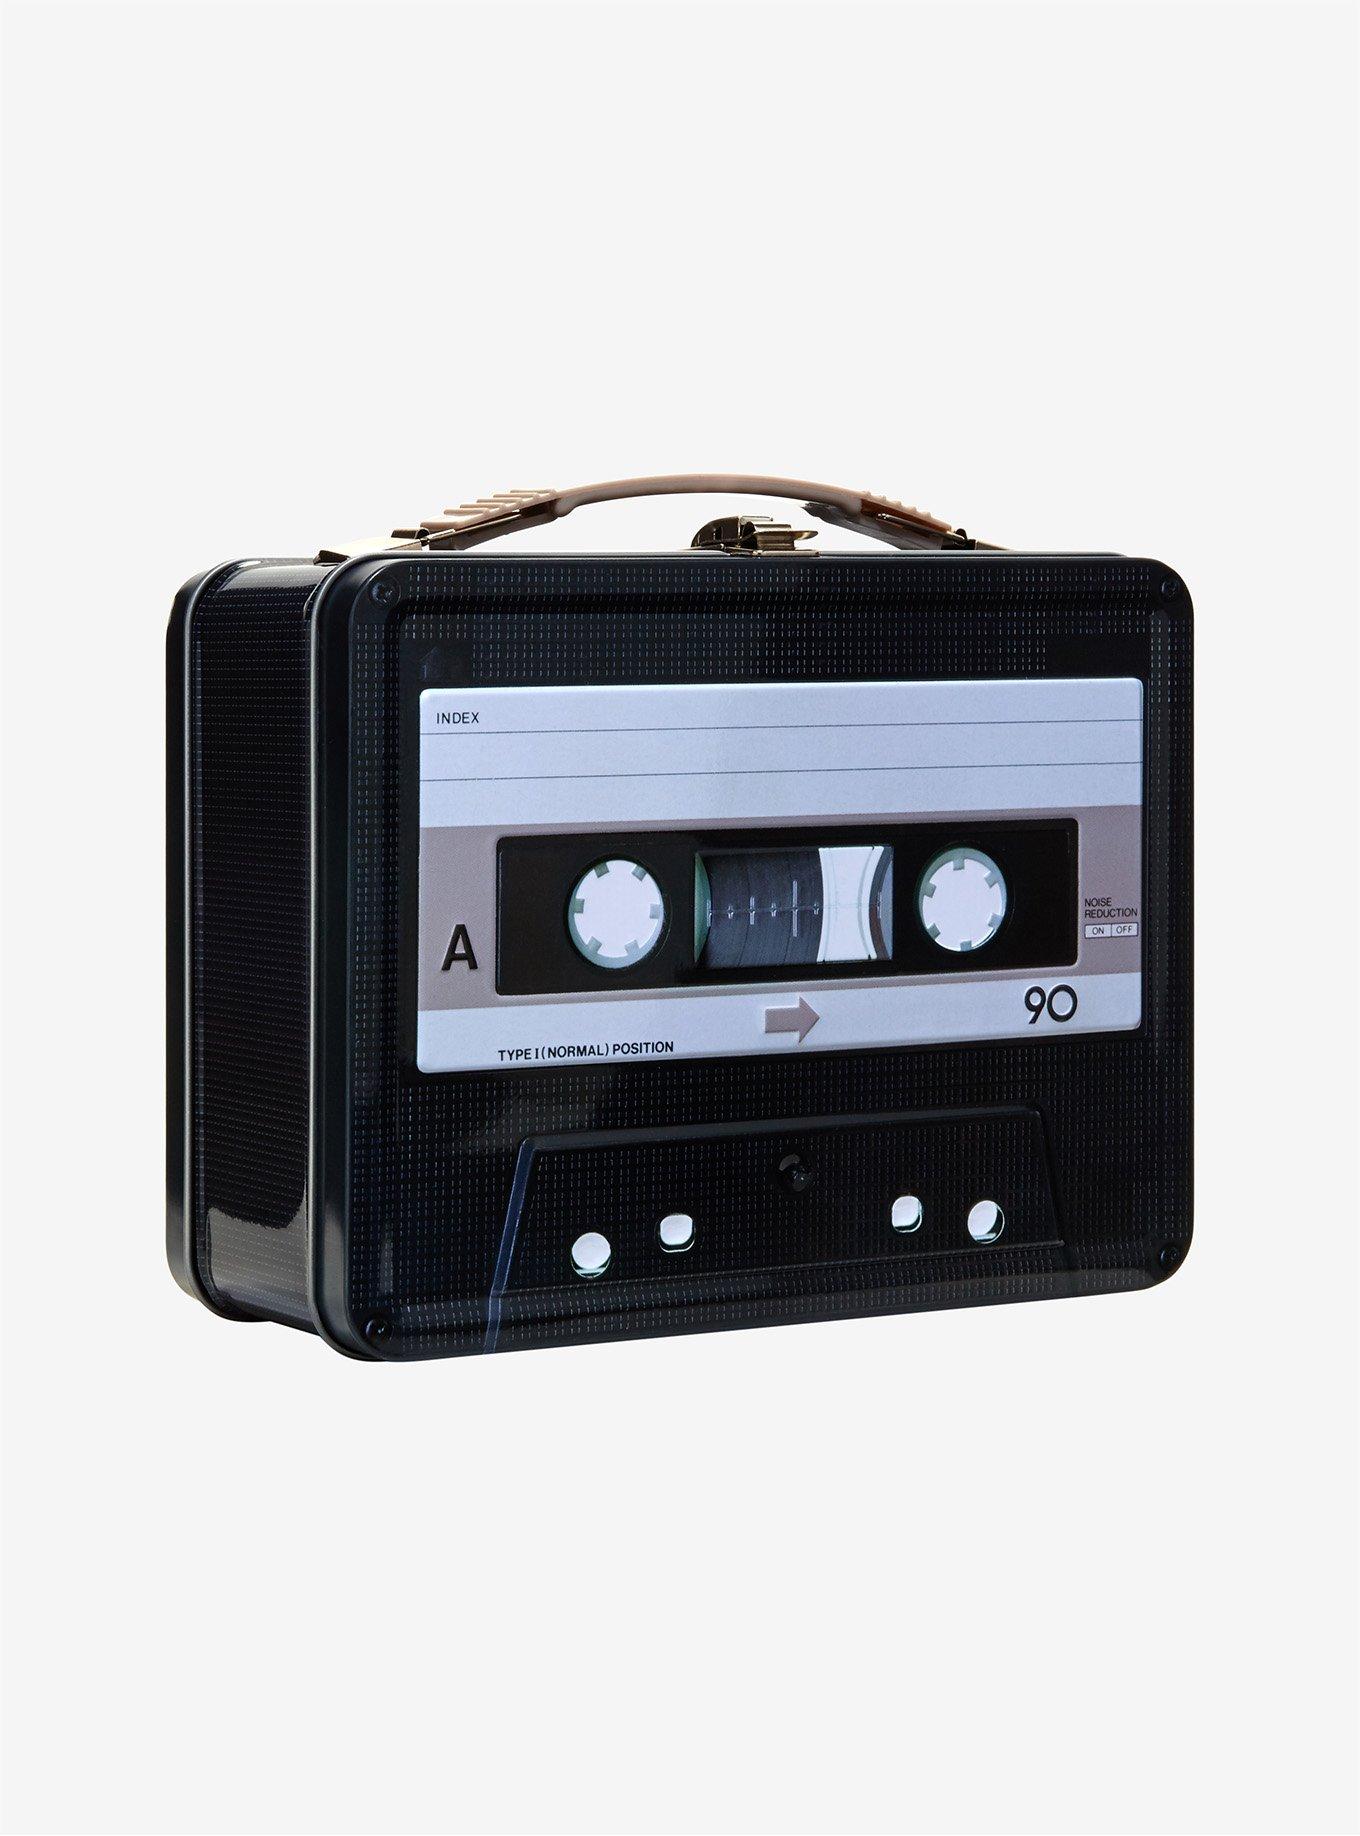 Cassette Metal Lunch Box, , hi-res